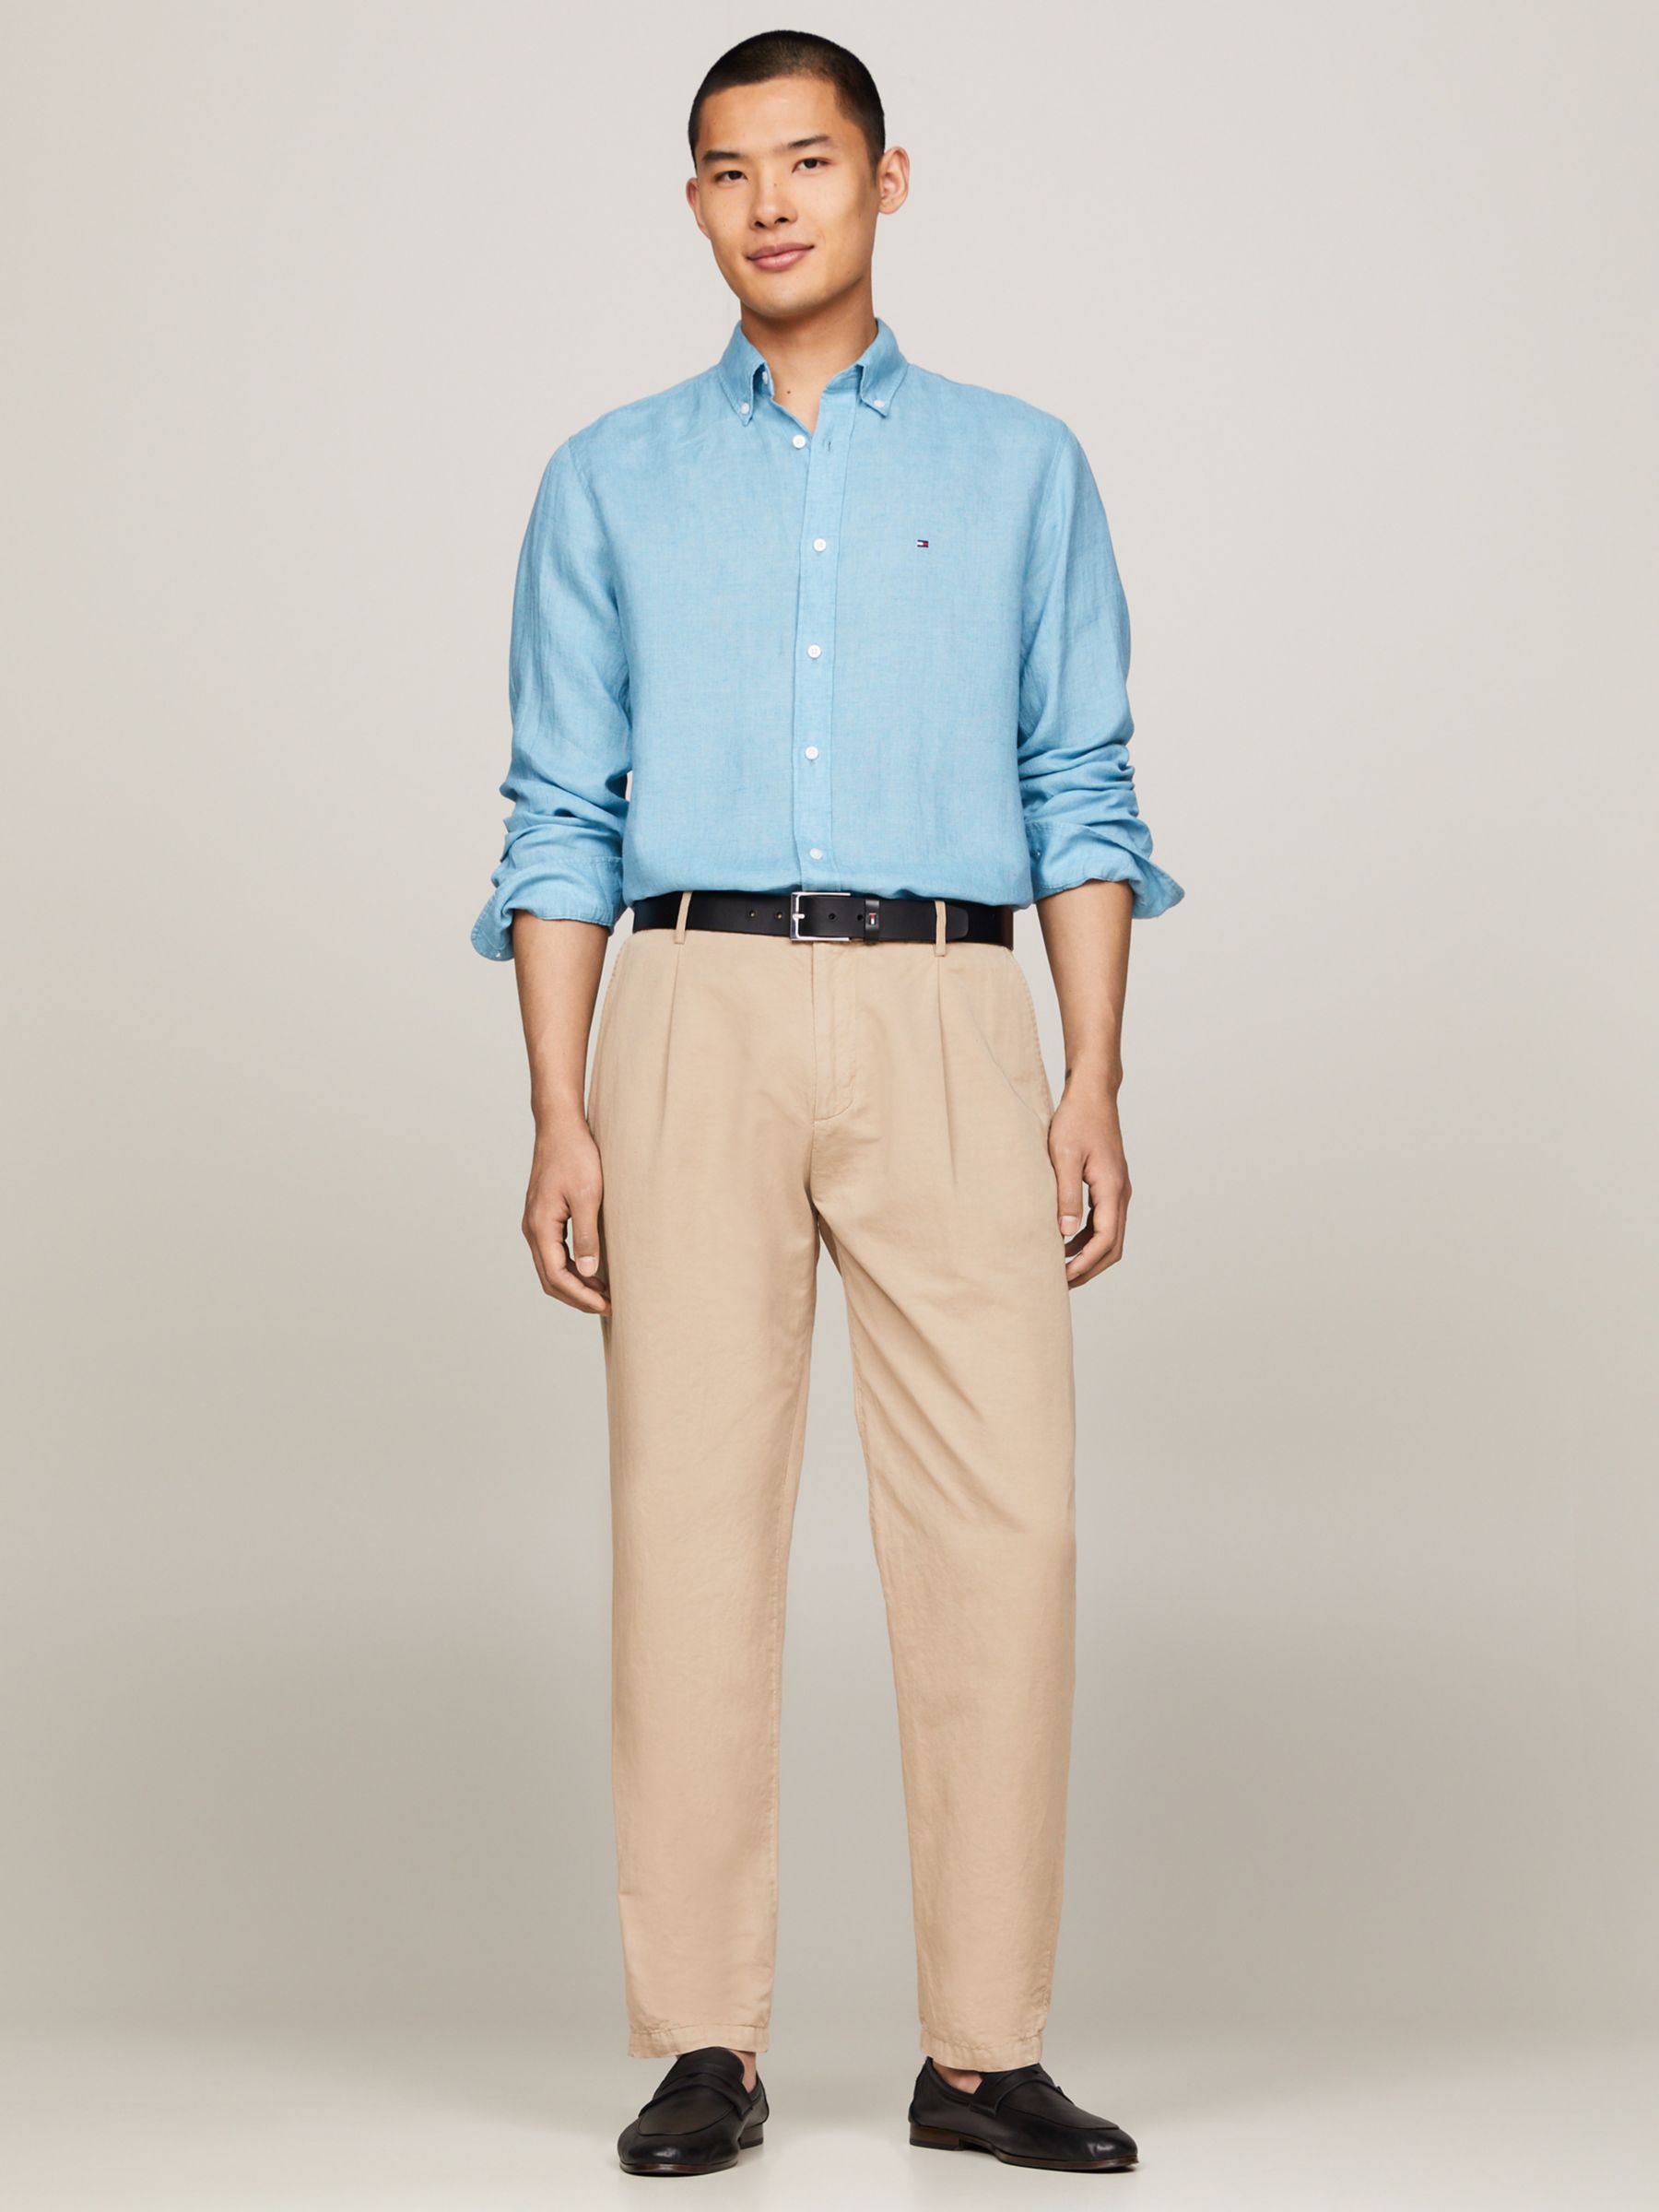 Tommy Hilfiger Pigment Linen Shirt, Sleepy Blue, XS